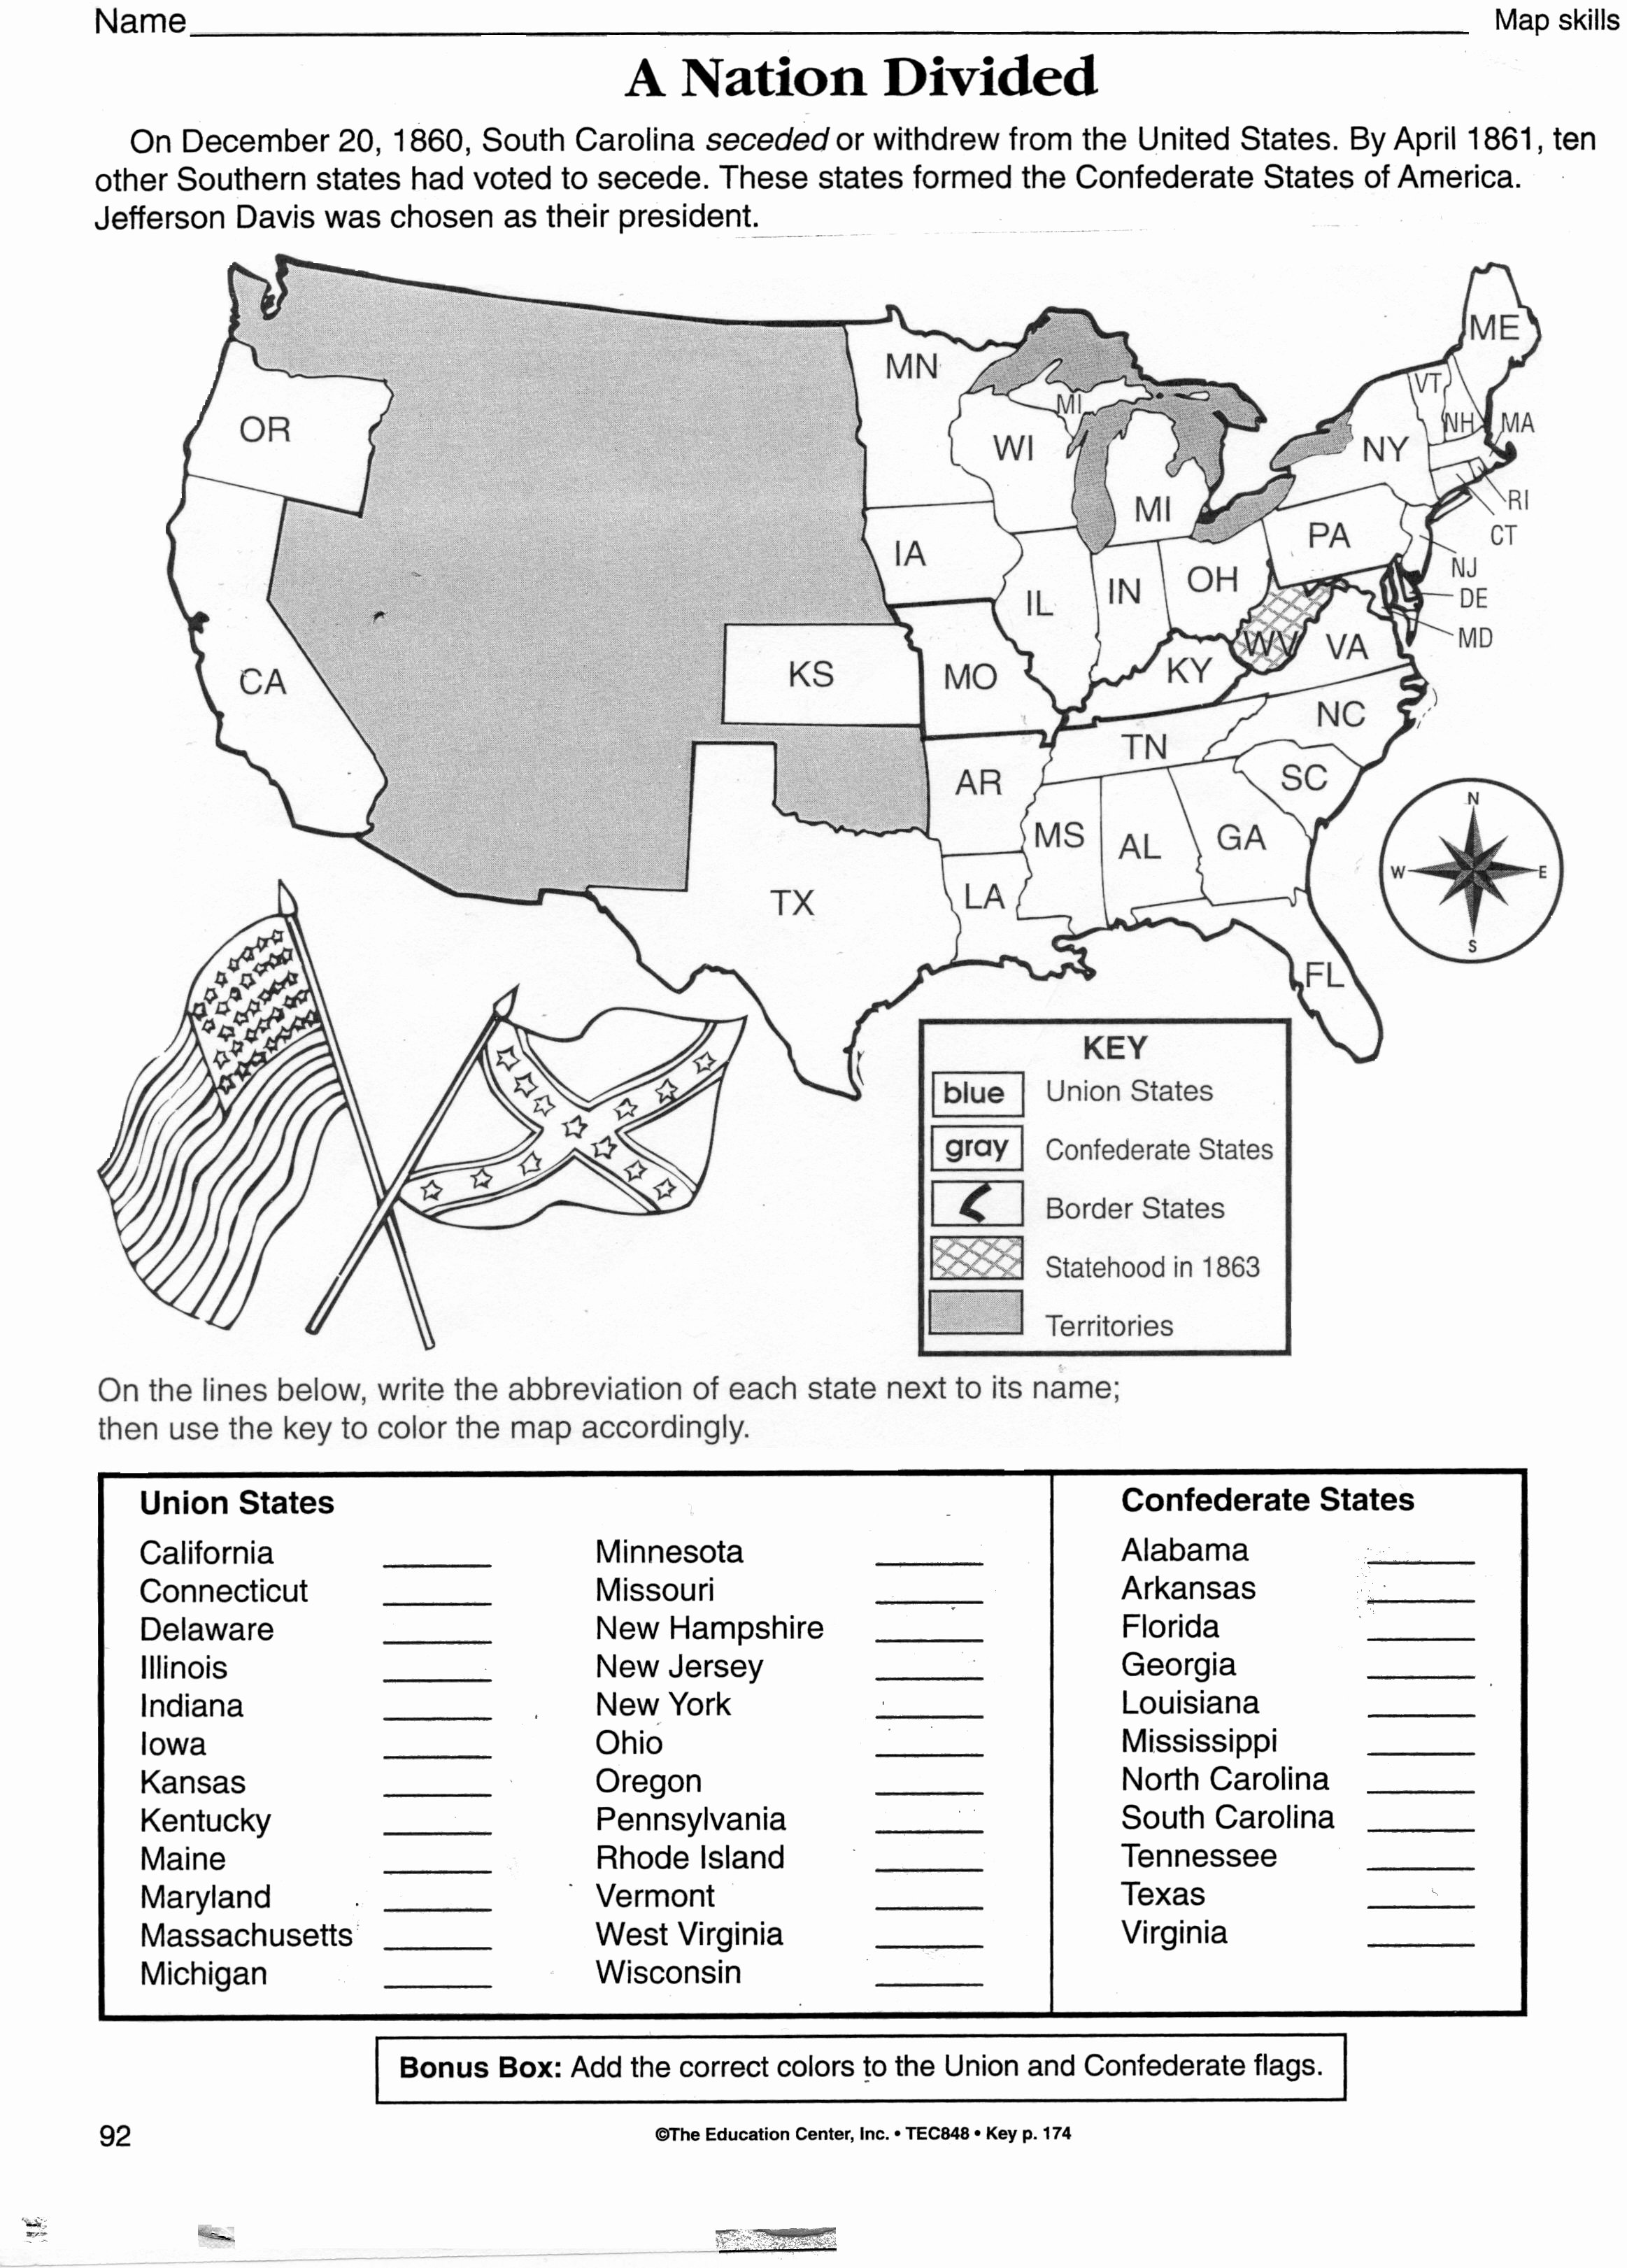 Civil War Battles Map Worksheet Lovely Texas Civil War Battle Map Worksheet the Best Worksheets